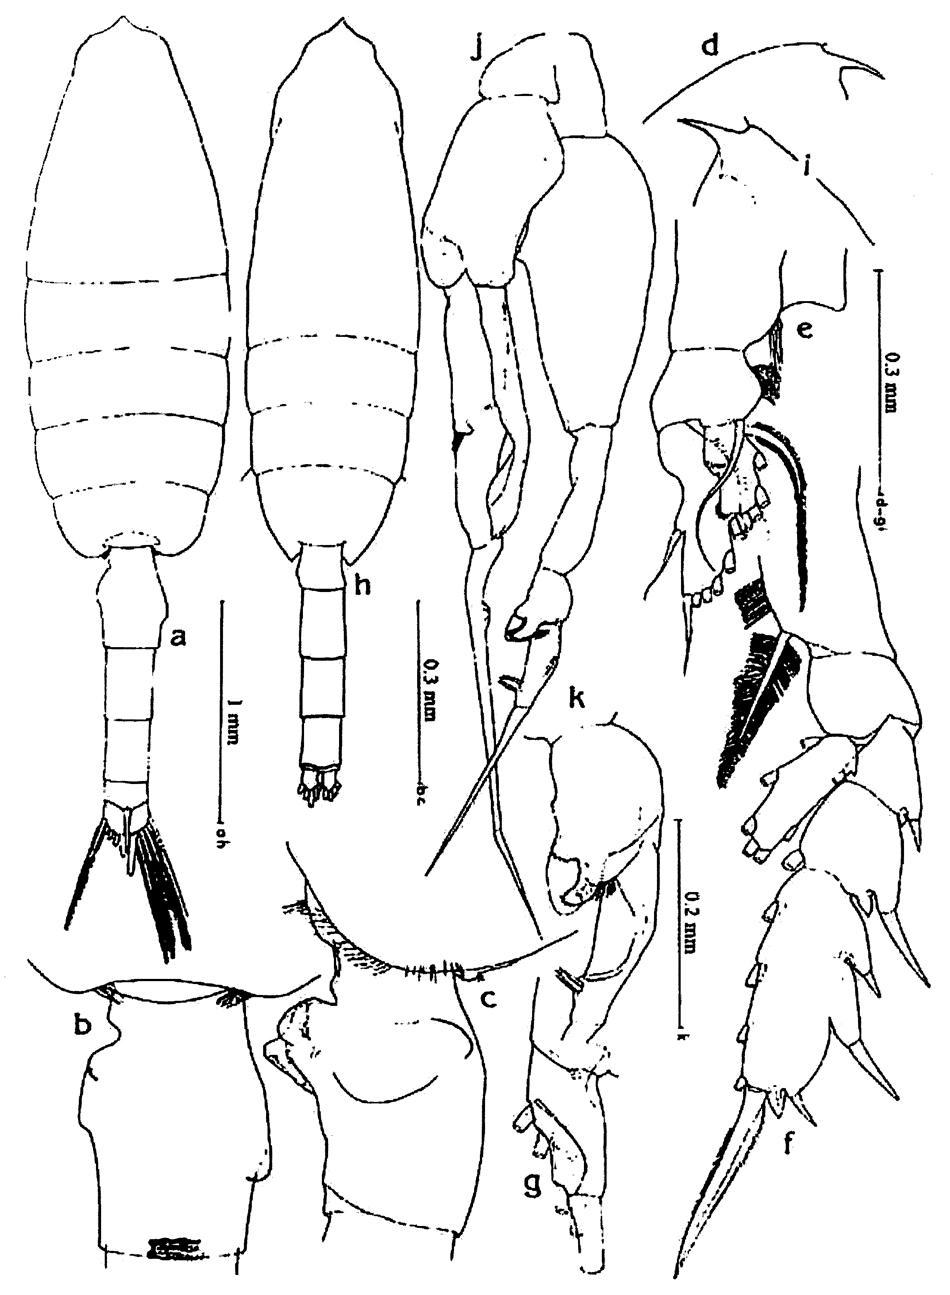 Species Euchaeta media - Plate 23 of morphological figures